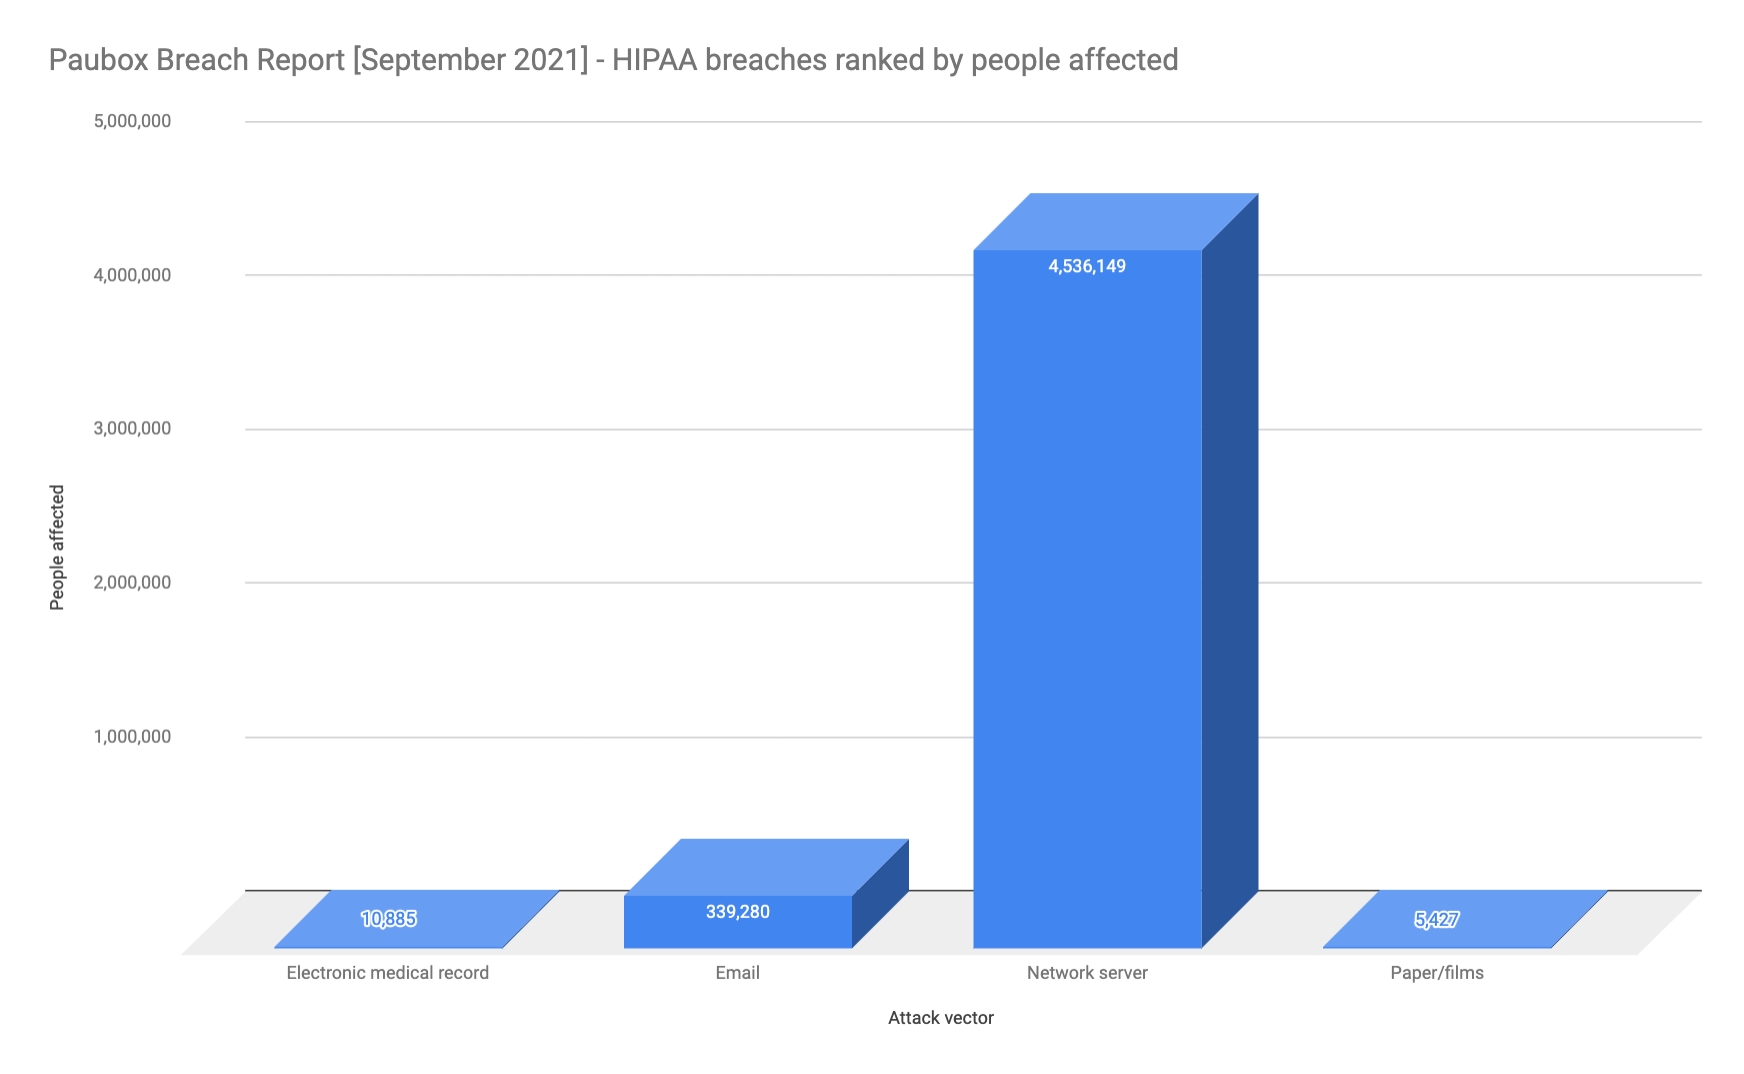 HIPAA Breach Report for September 2021